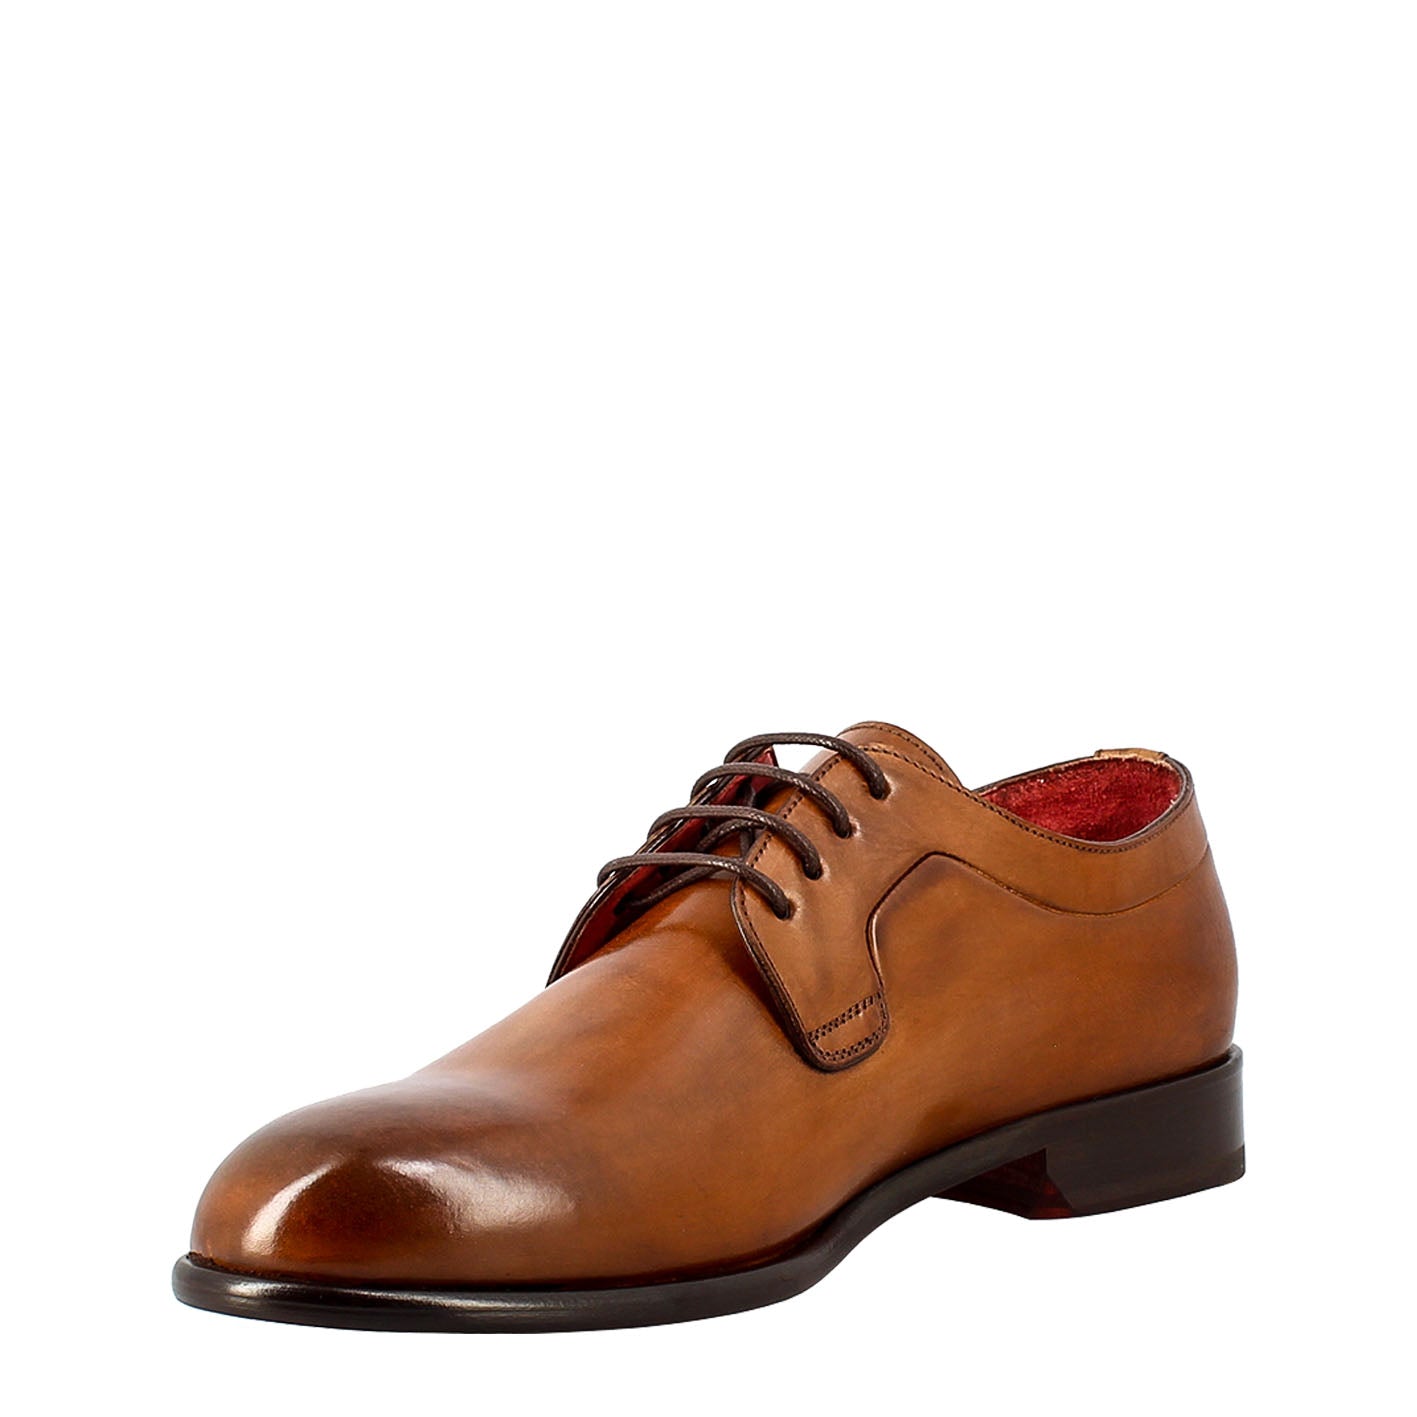 Elegant brown derby for men in smooth leather